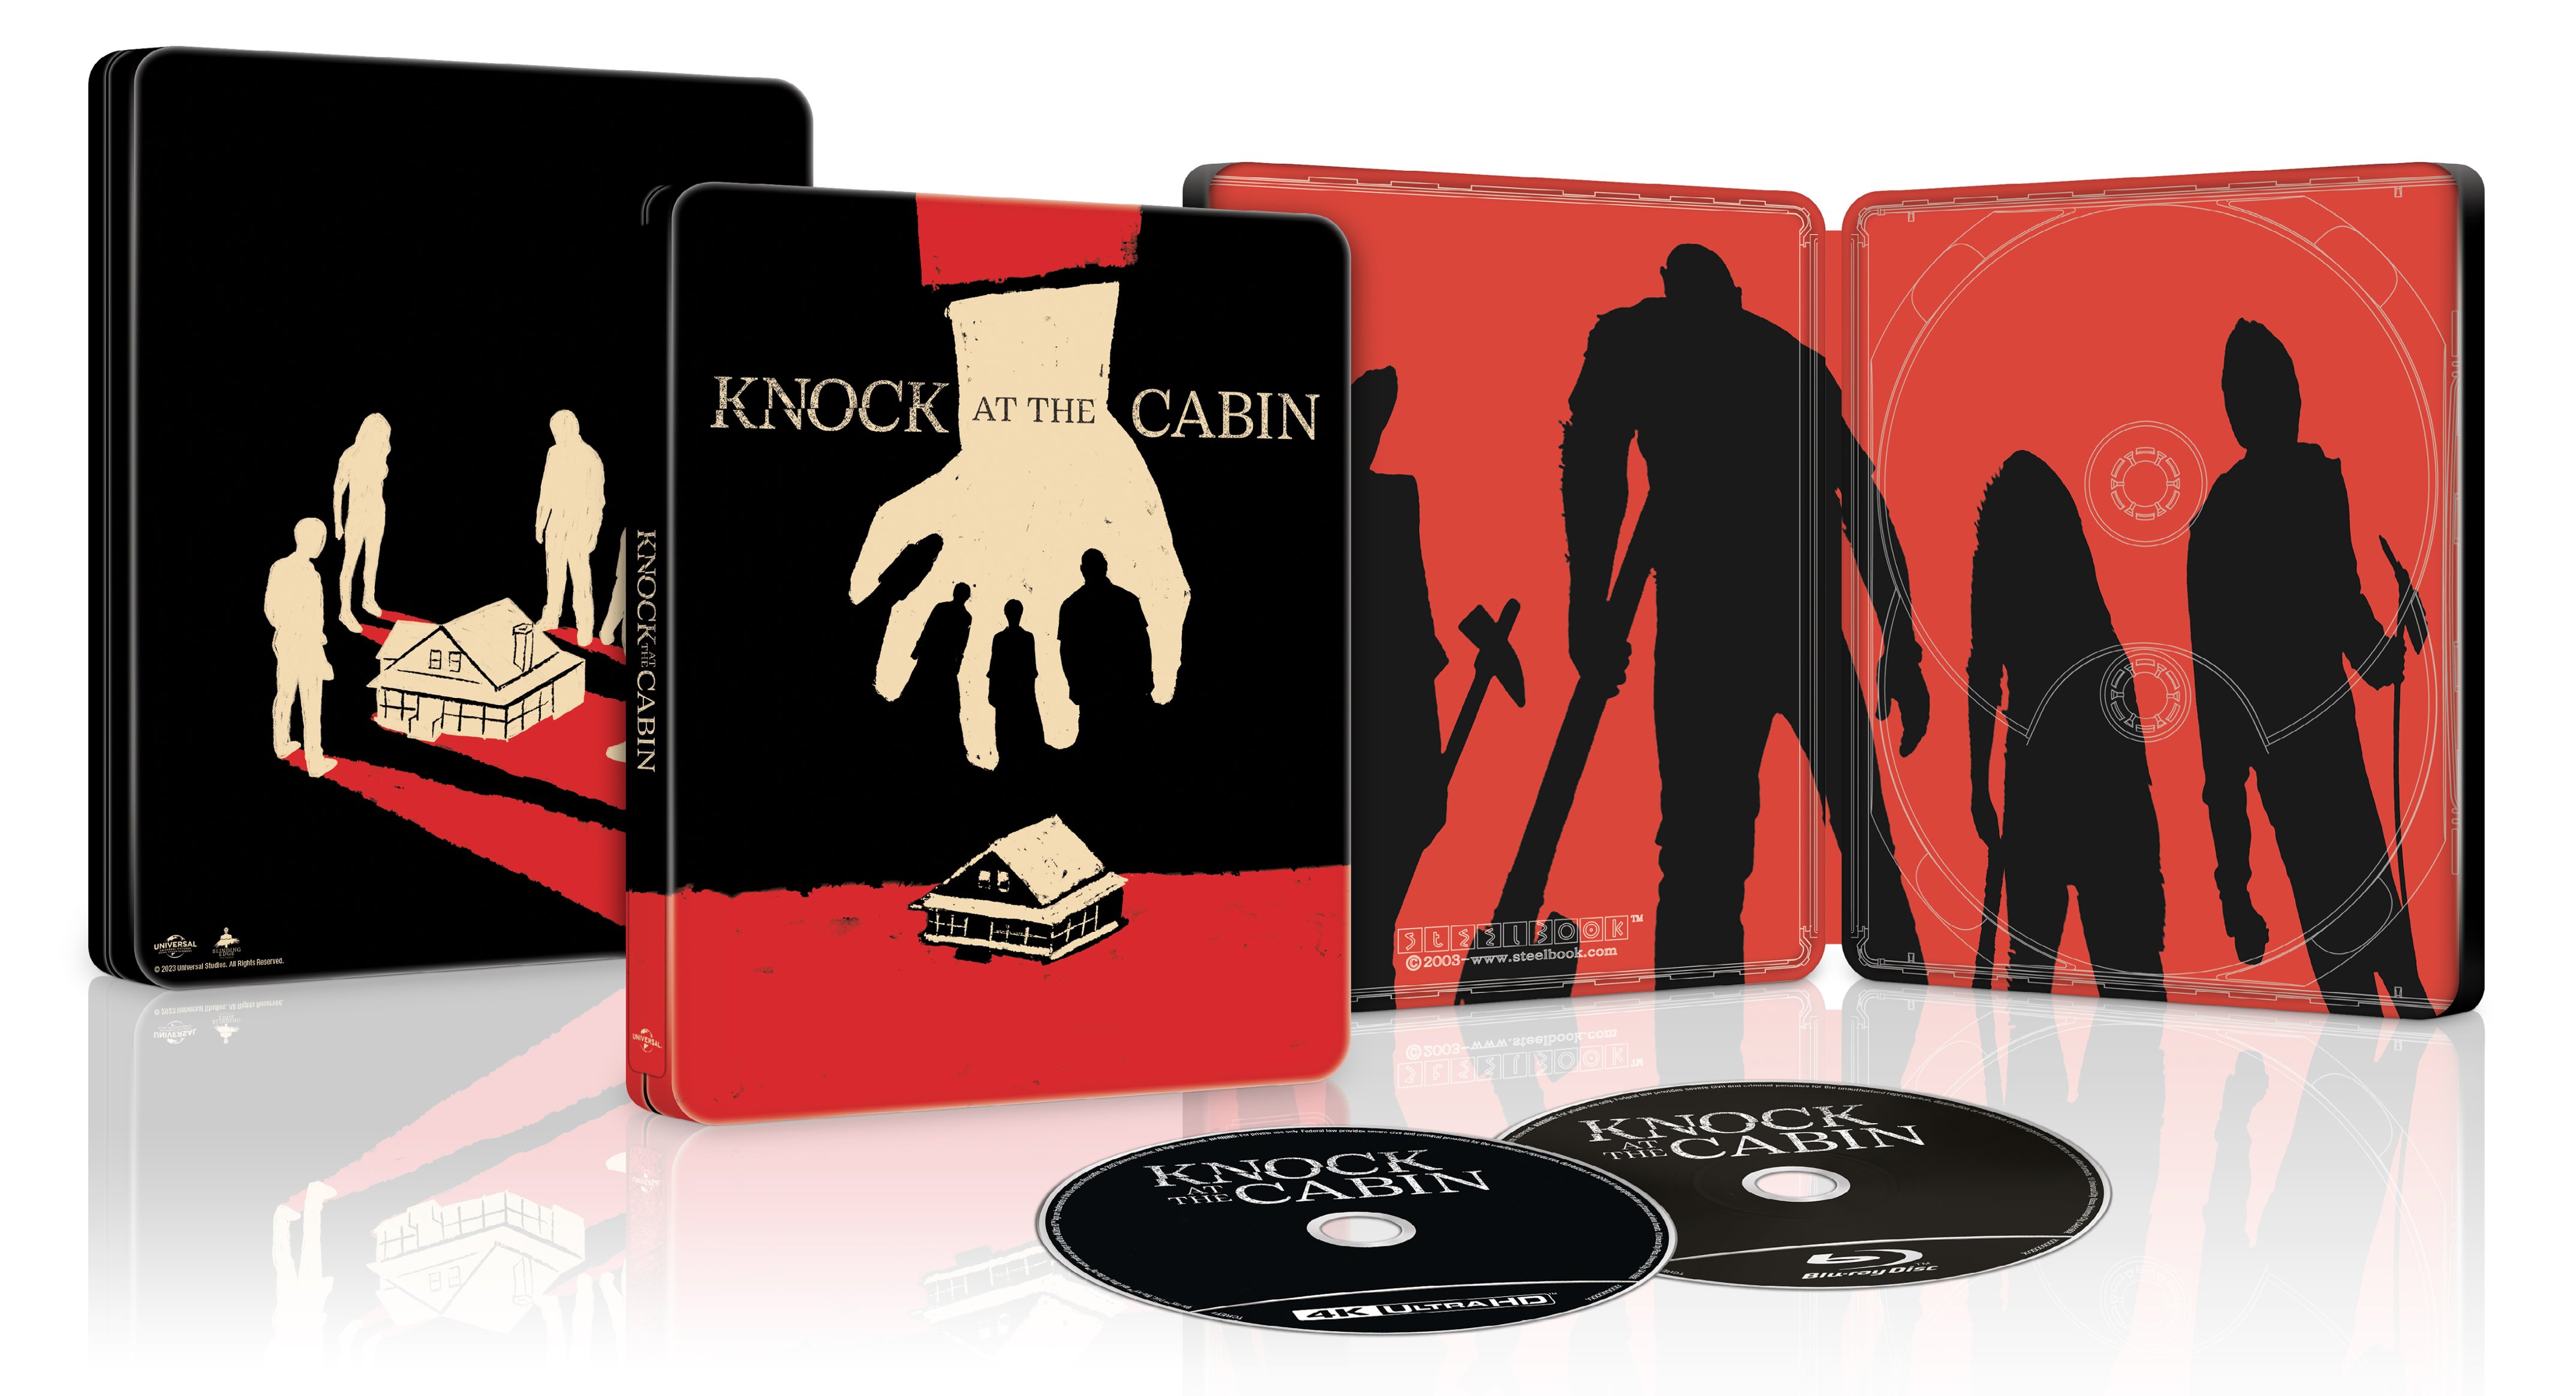 Evil Dead Rise [Includes Digital Copy] [Blu-ray/DVD] [2023] - Best Buy